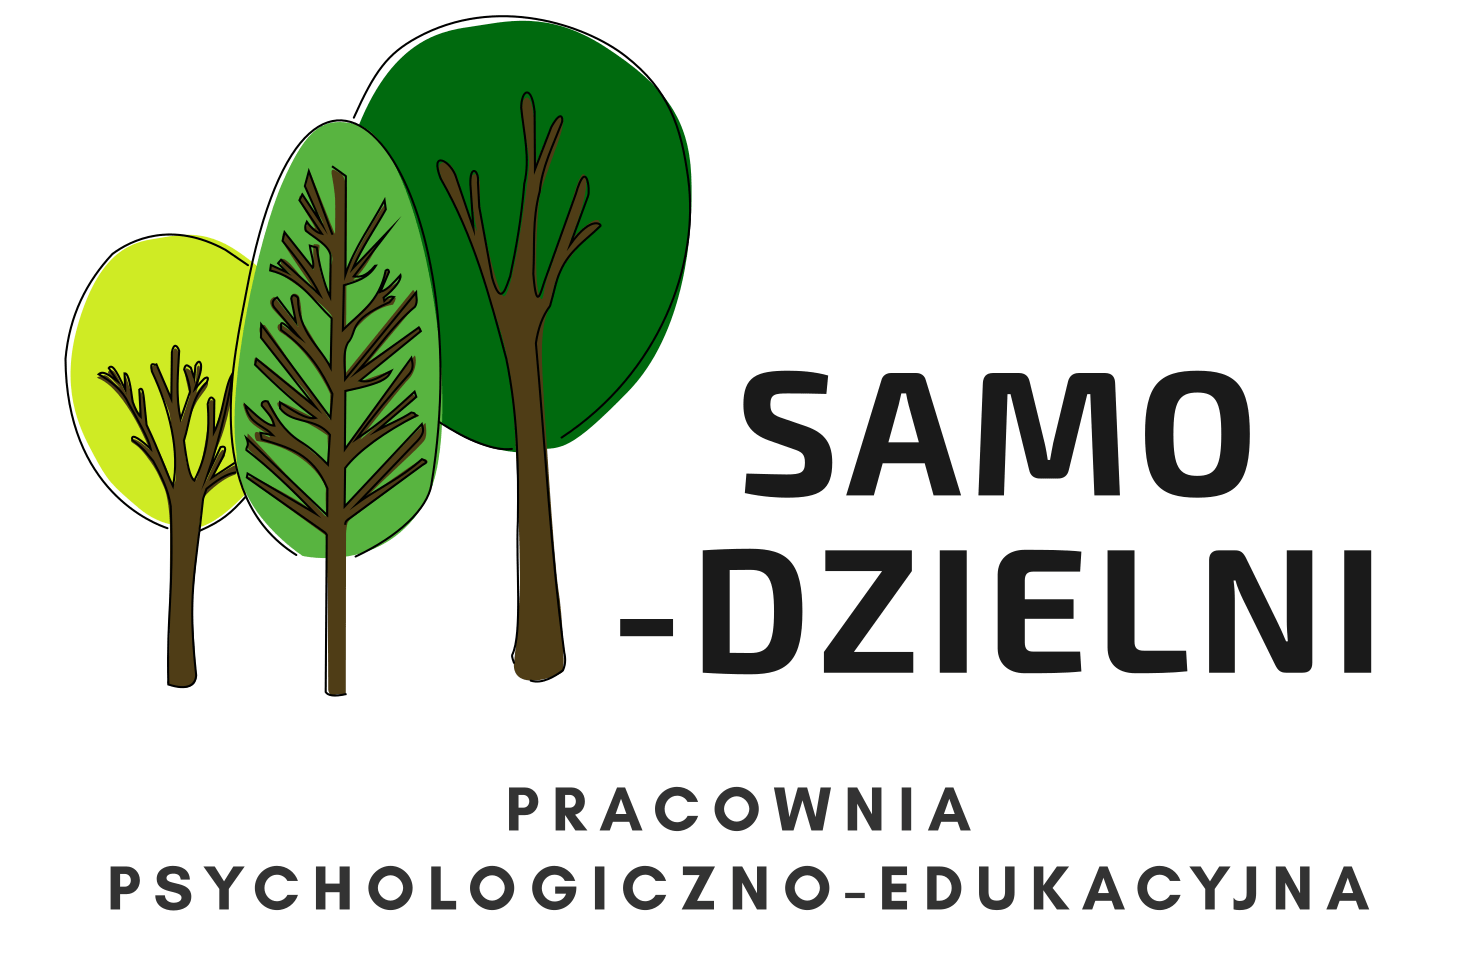 Psycholog, psychoterapia i grupy zabawowe | Poznań i okolice